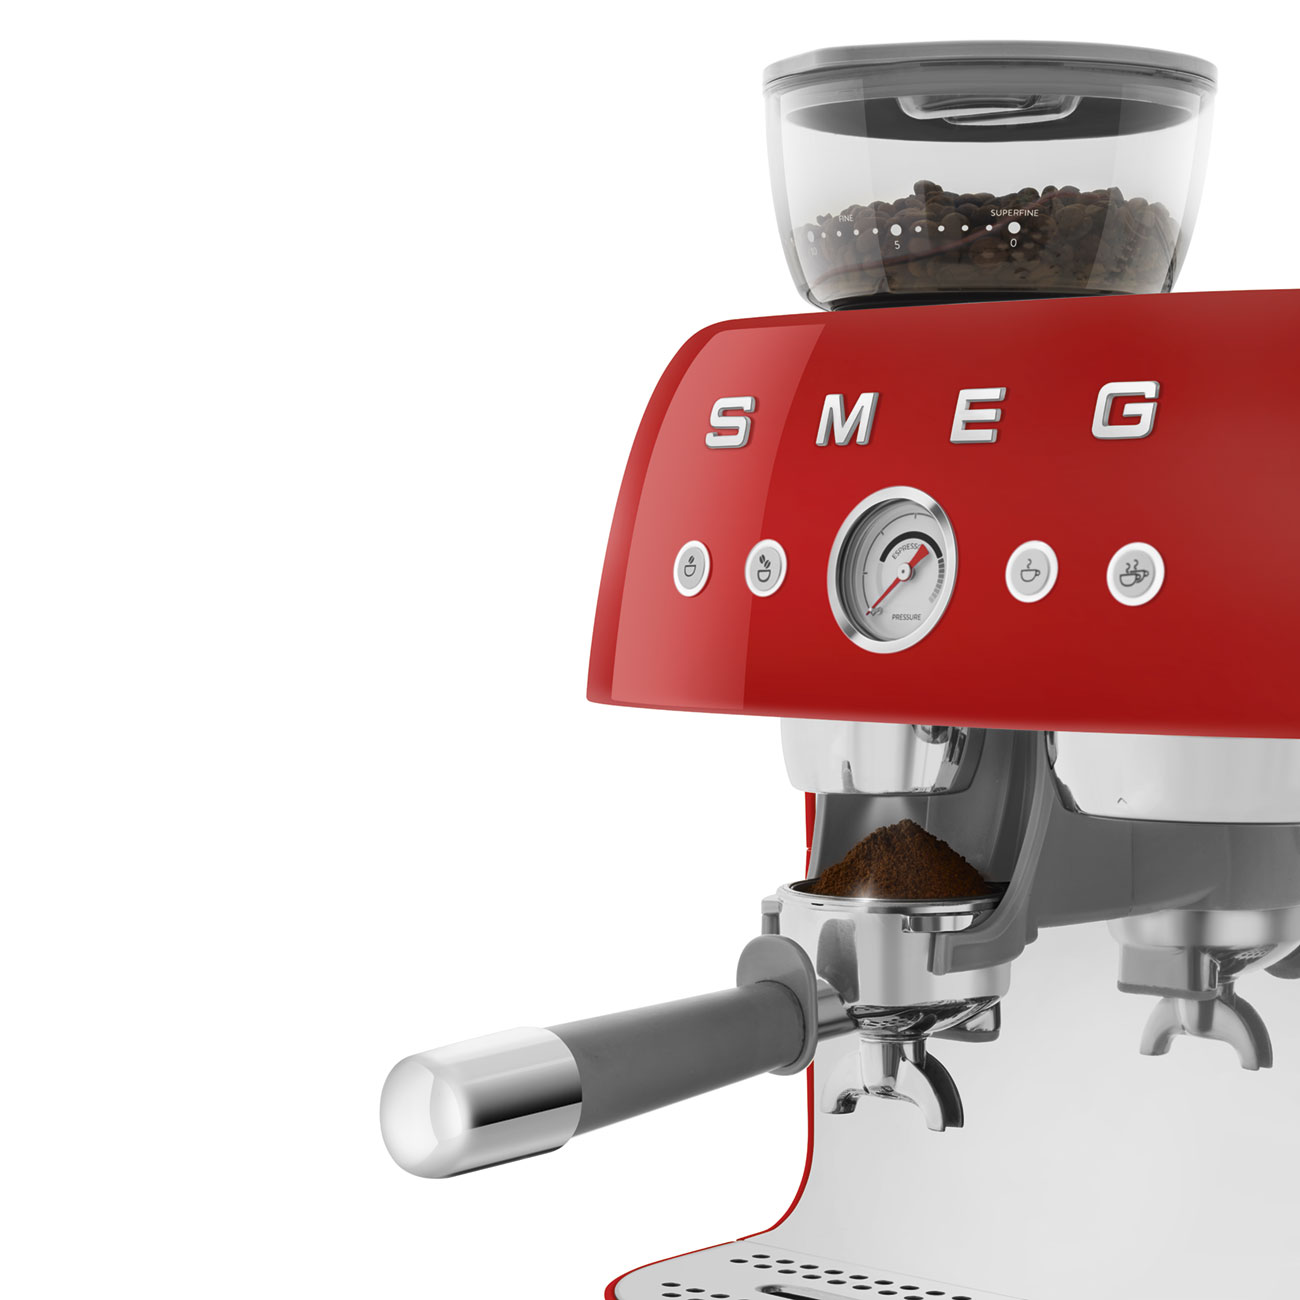 Smeg Red Espresso Manual Coffee Machine with Grinder_6